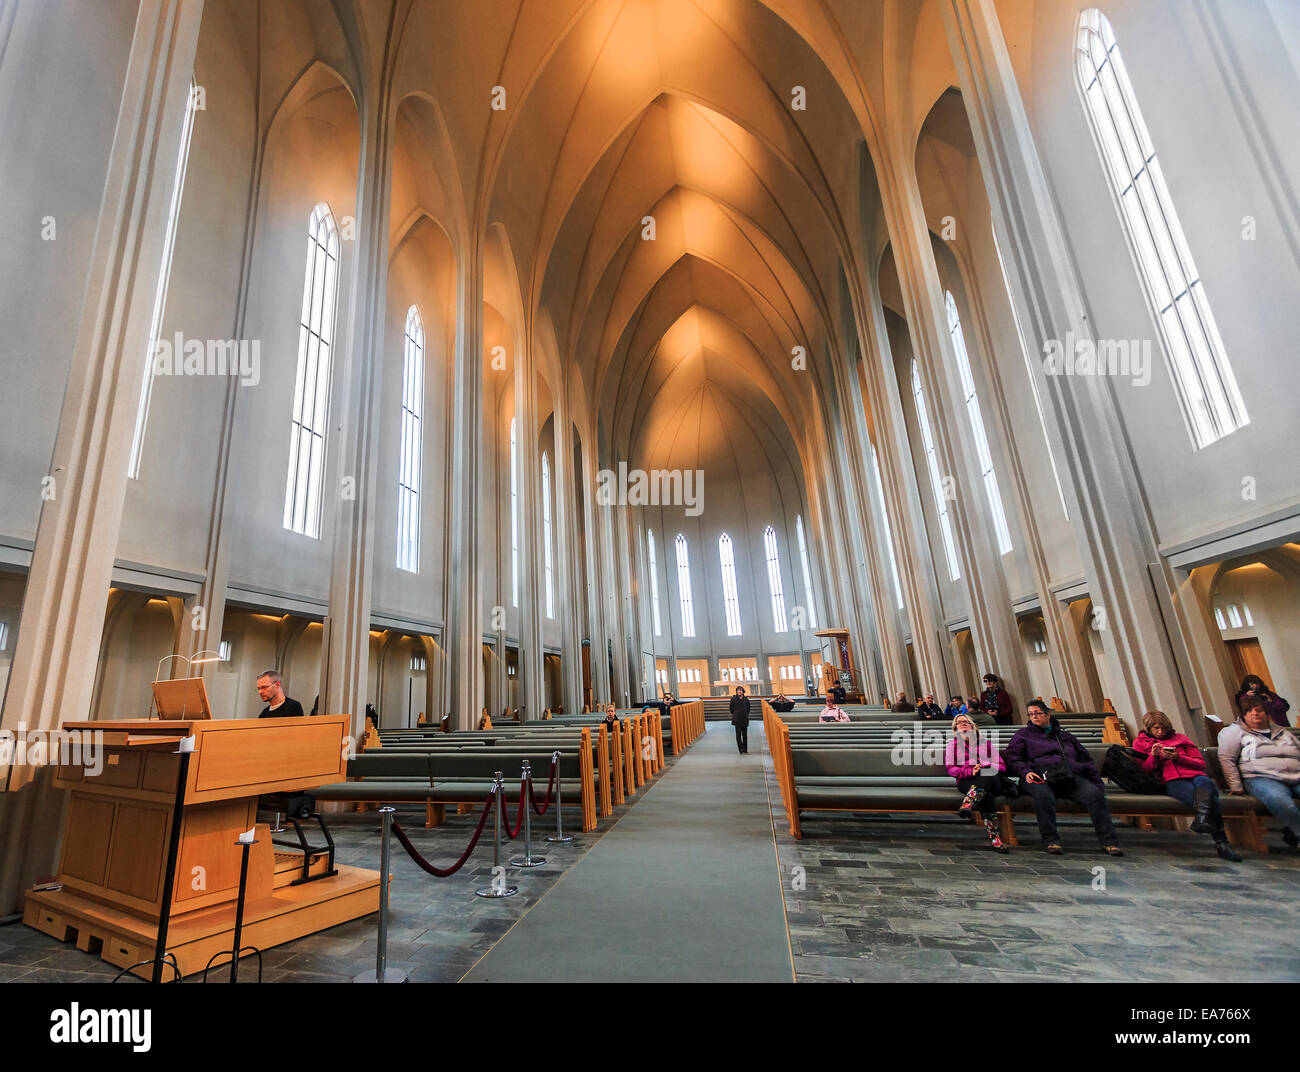 Inside Hallgrímskirkja, an iconic landmark Lutheran parish church in Reykjavík, Iceland Stock Photo